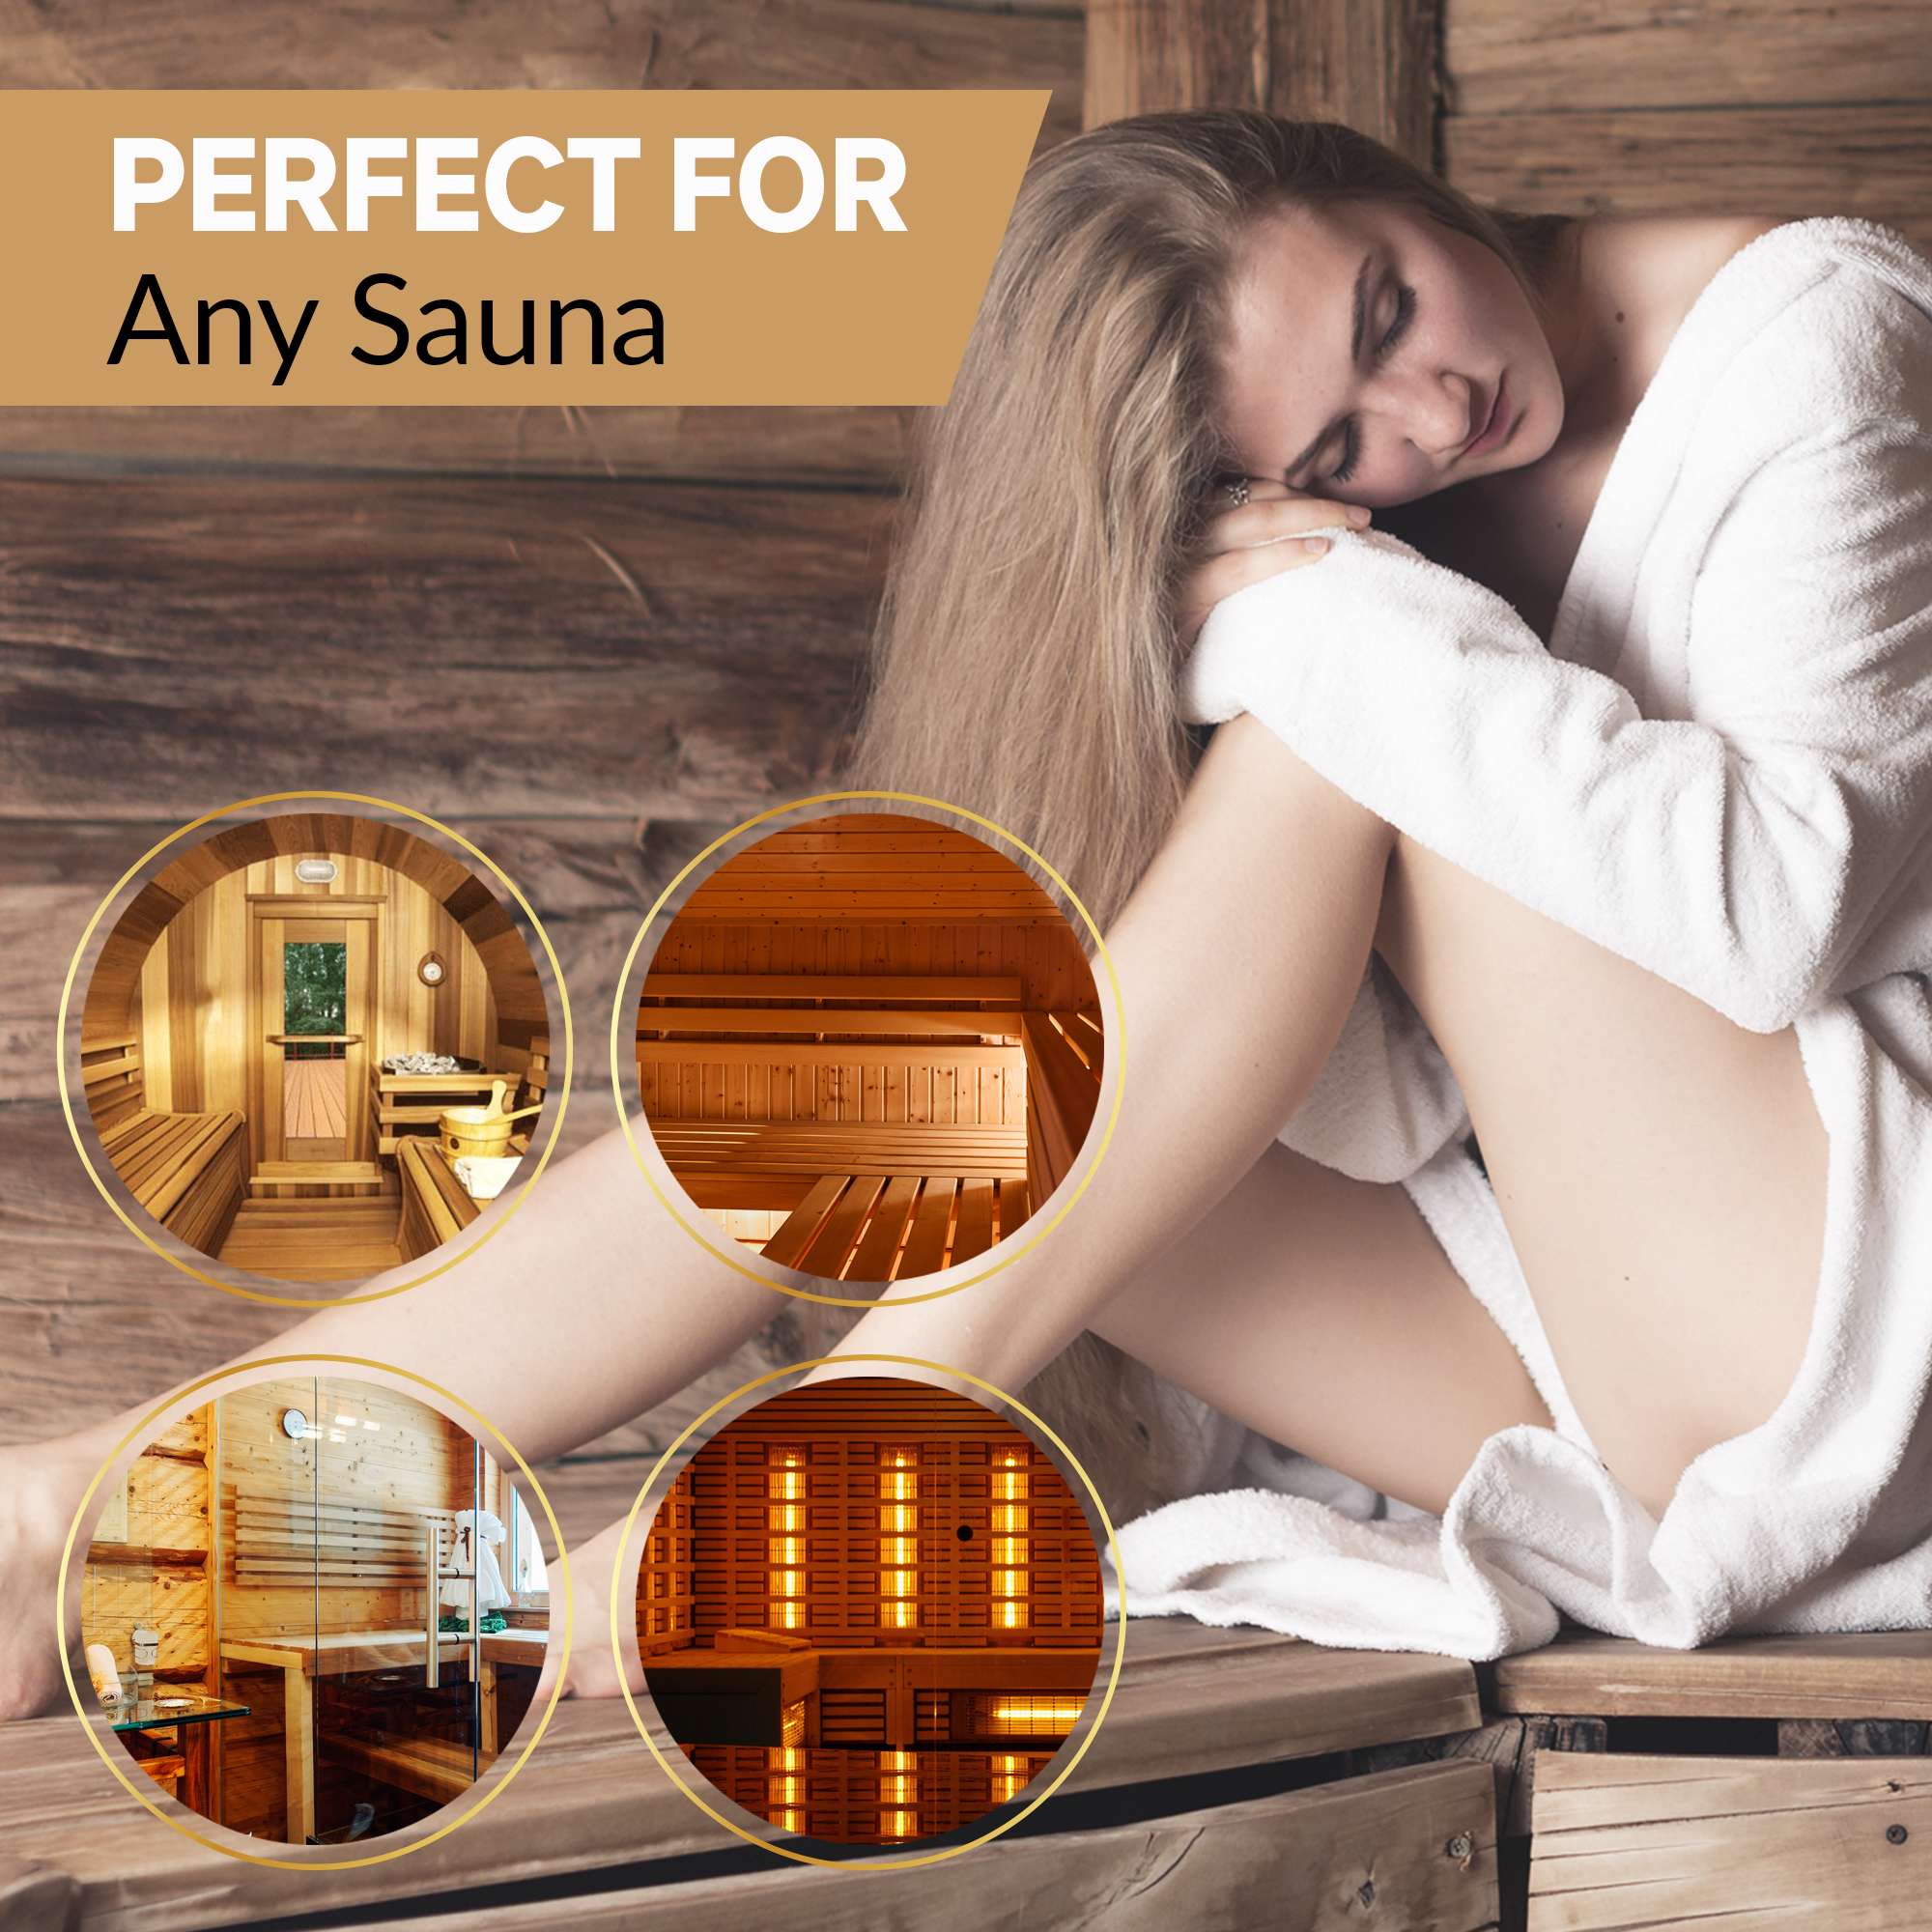 Pasithea Sauna Backrest – Premium Red Cedar & Slip-Resistant